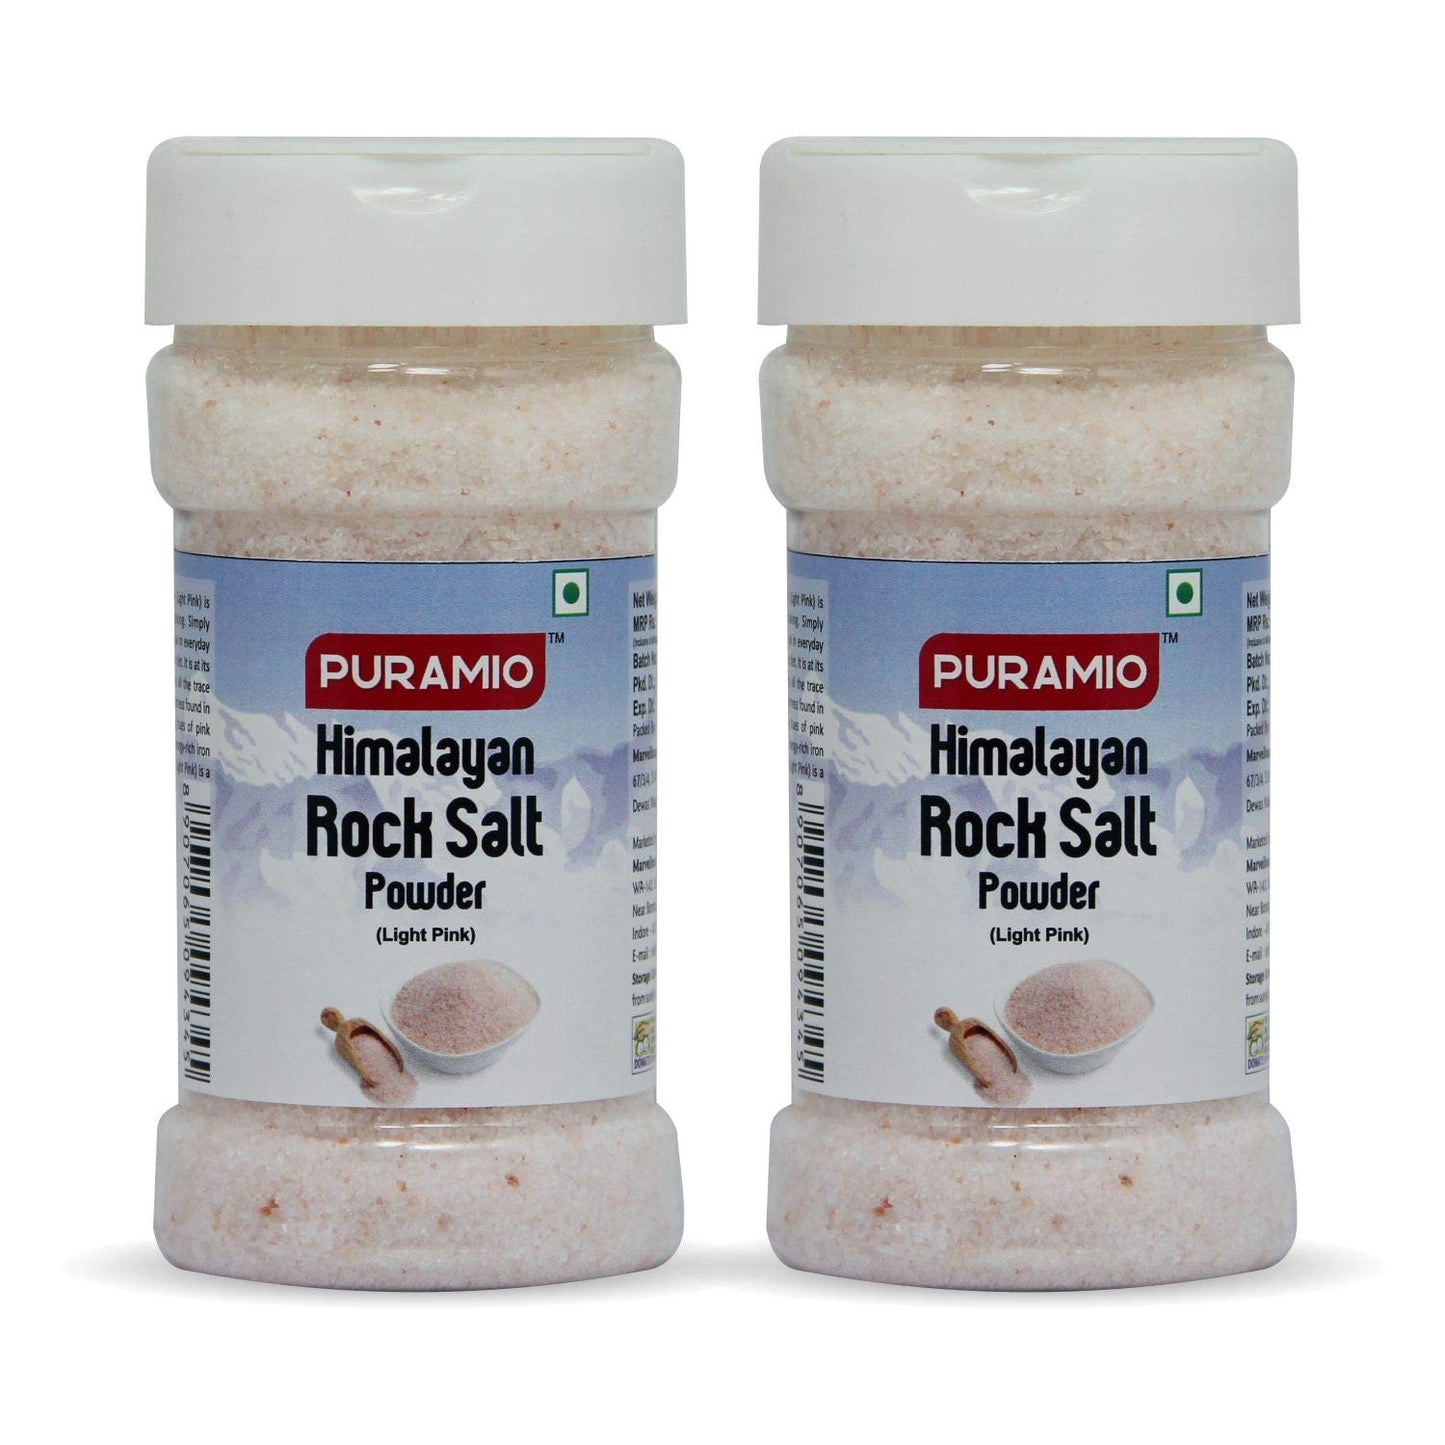 Puramio Himalayan Pink Rock Salt Powder in Sprinkler Jar - Light, 500g [250g x 2]